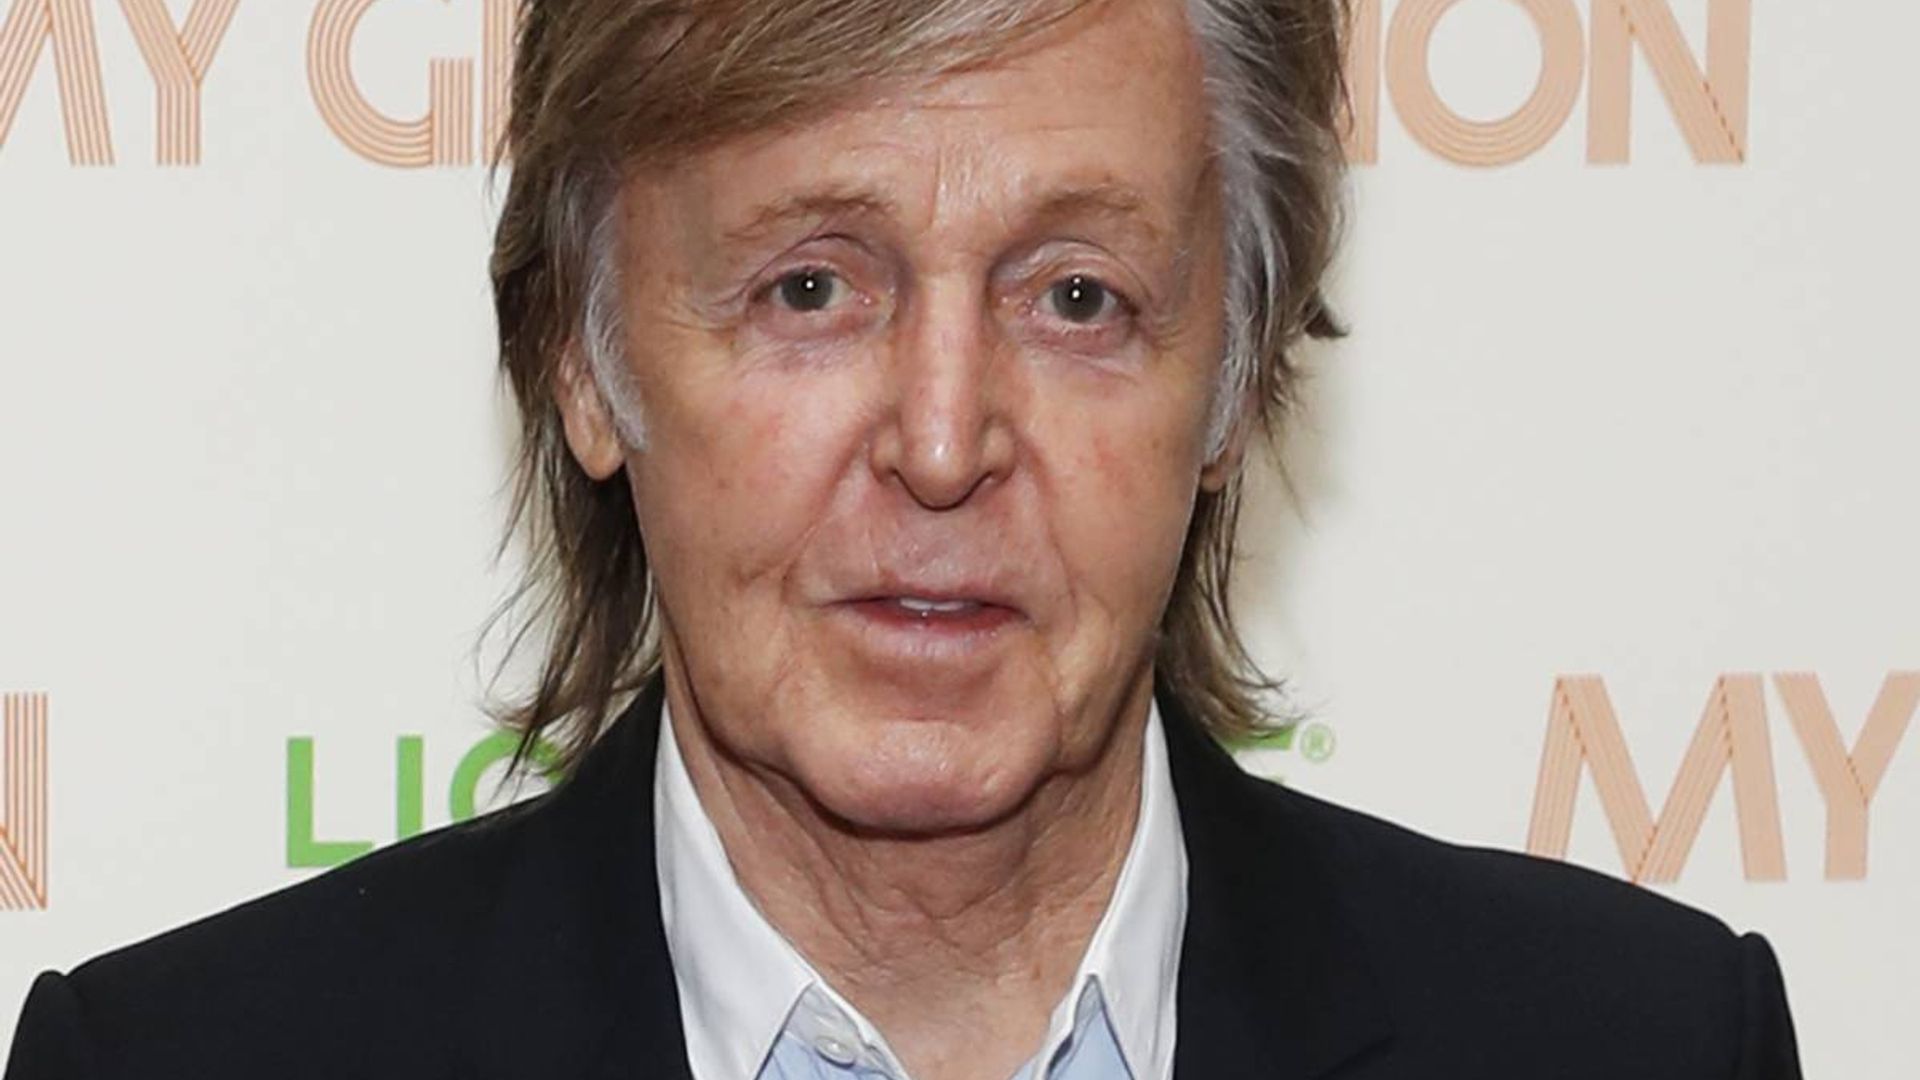 Paul McCartney shares emotional tribute following devastating death of friend